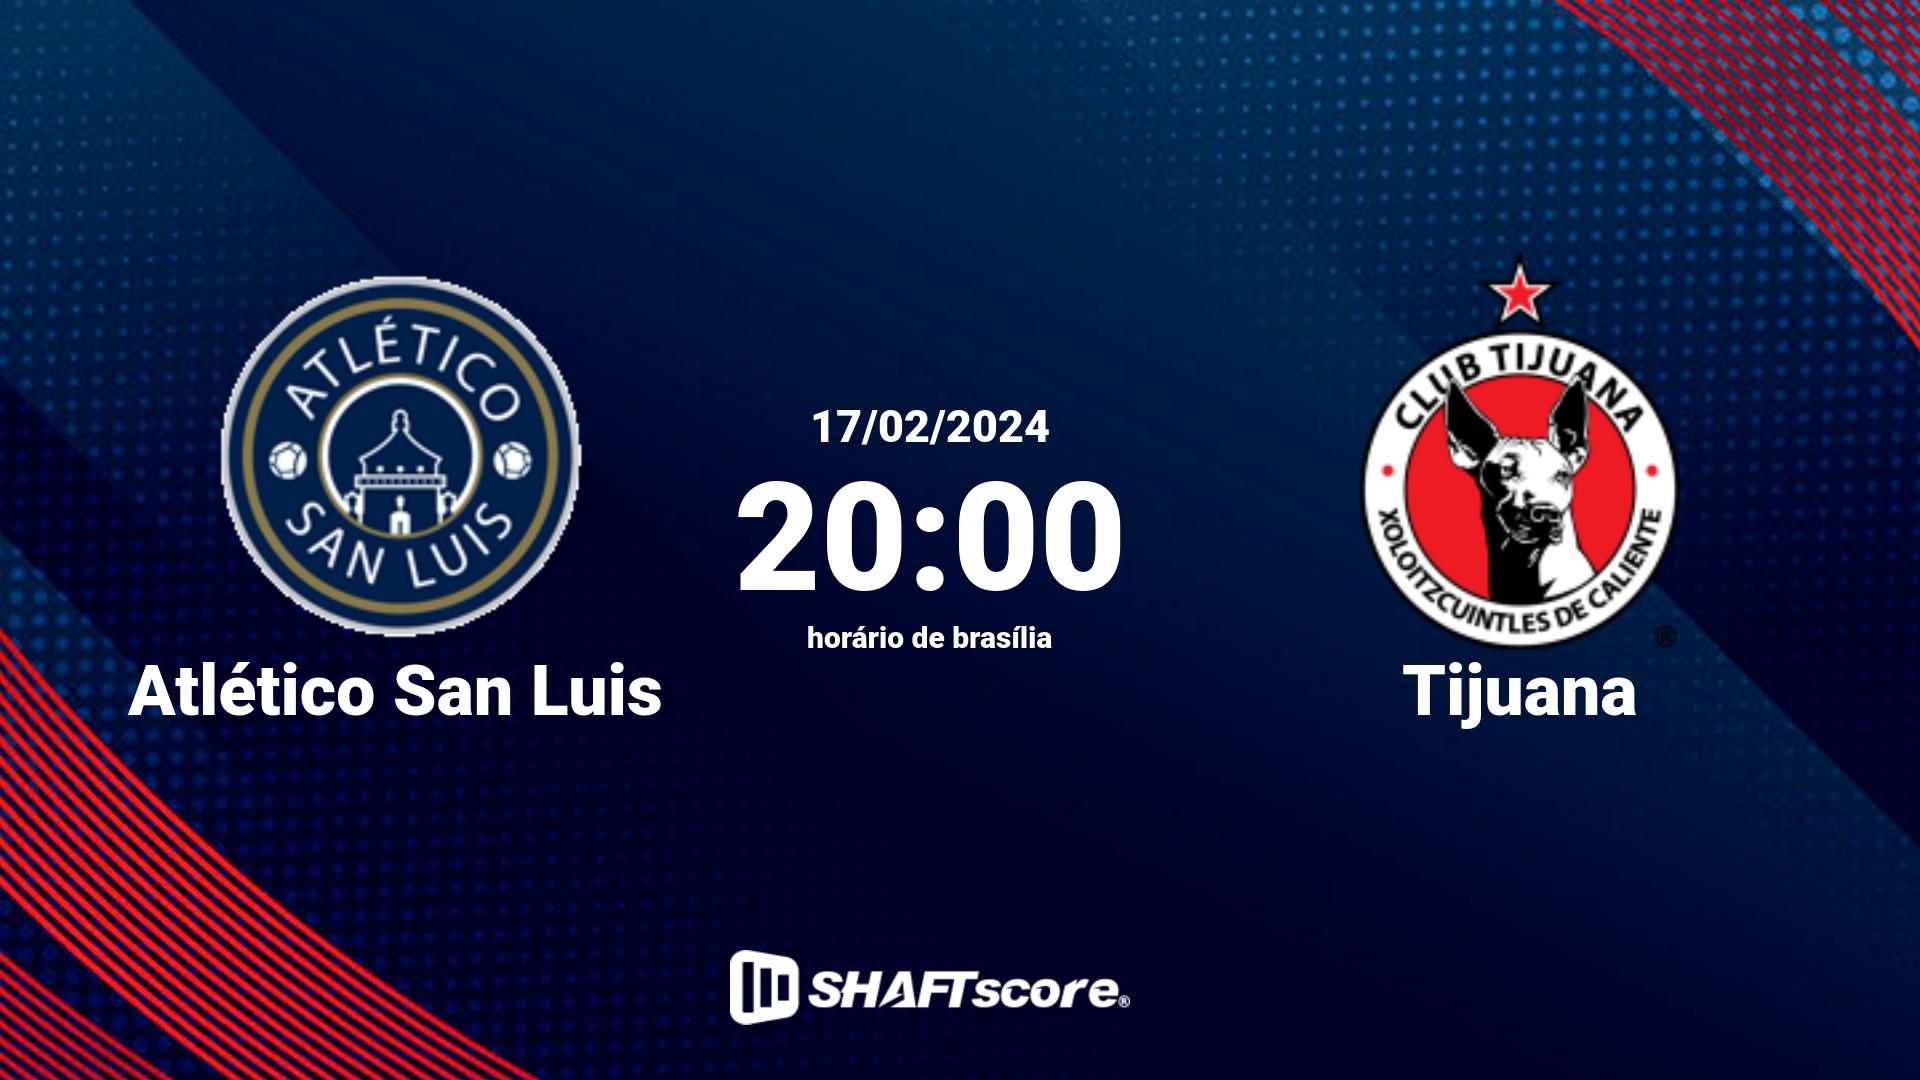 Estatísticas do jogo Atlético San Luis vs Tijuana 17.02 20:00